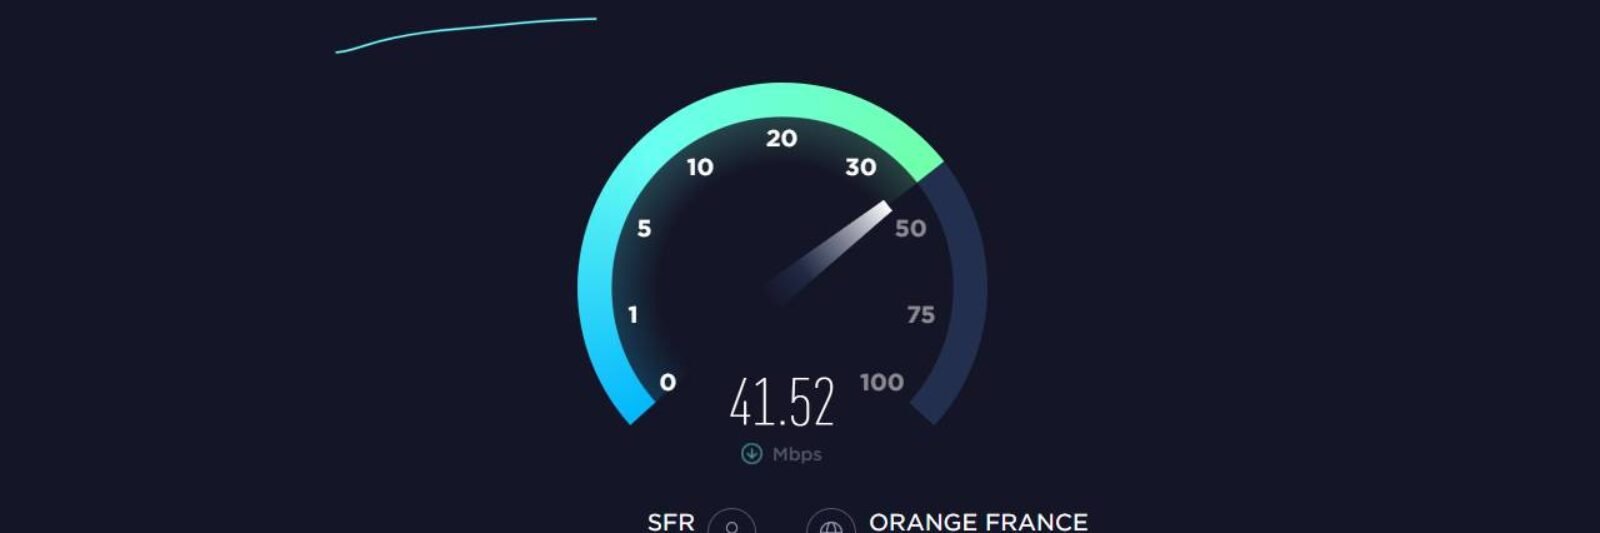 kerbeleg vitesse de connection internet